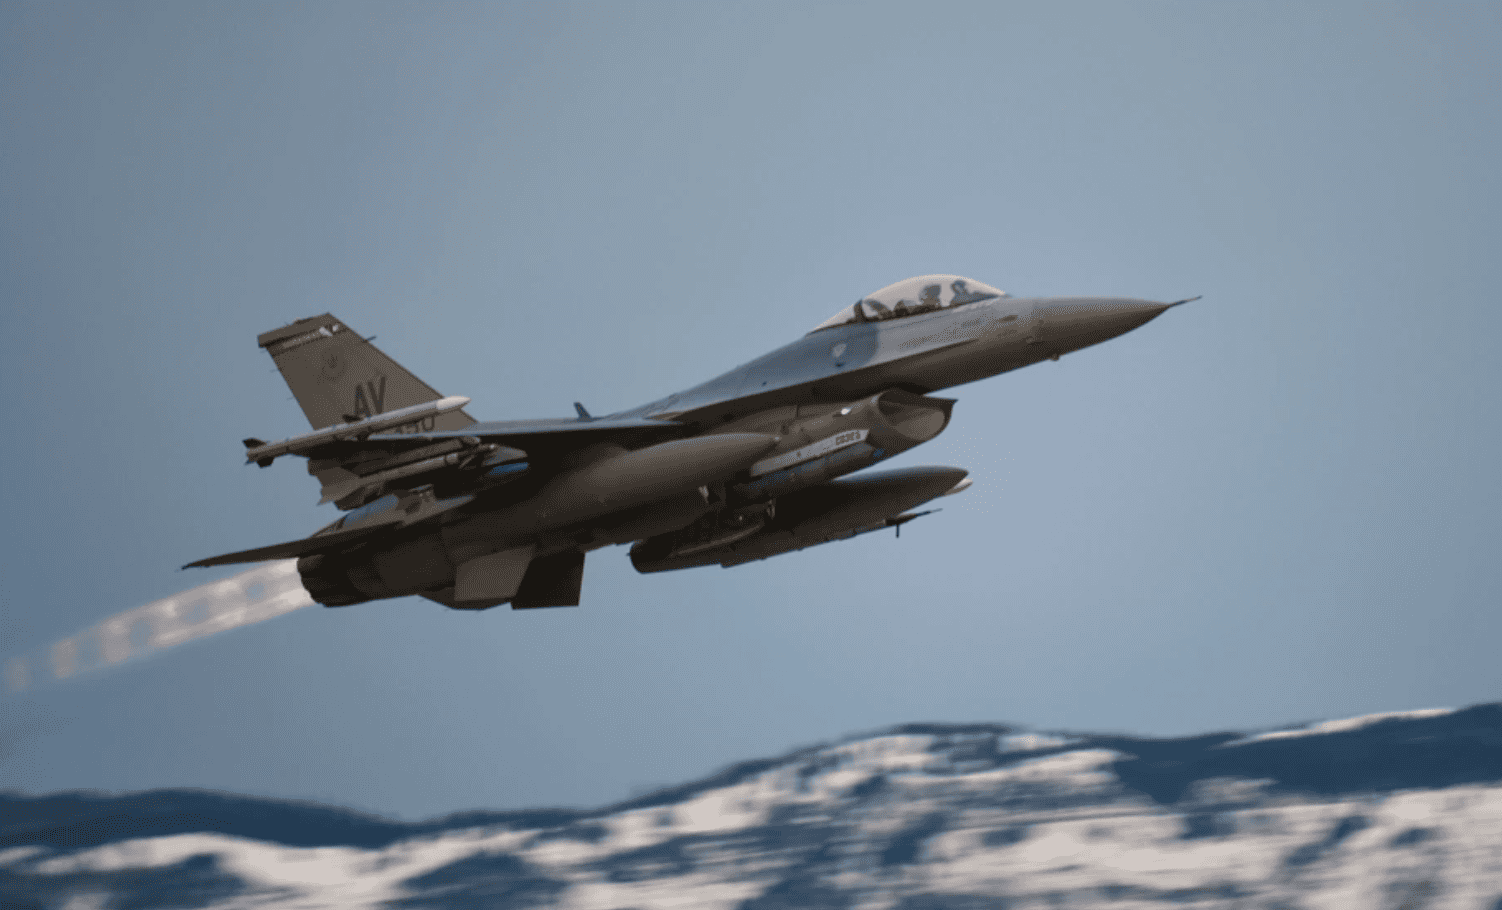 US F-16 fighter jet crashes off South Korean coast